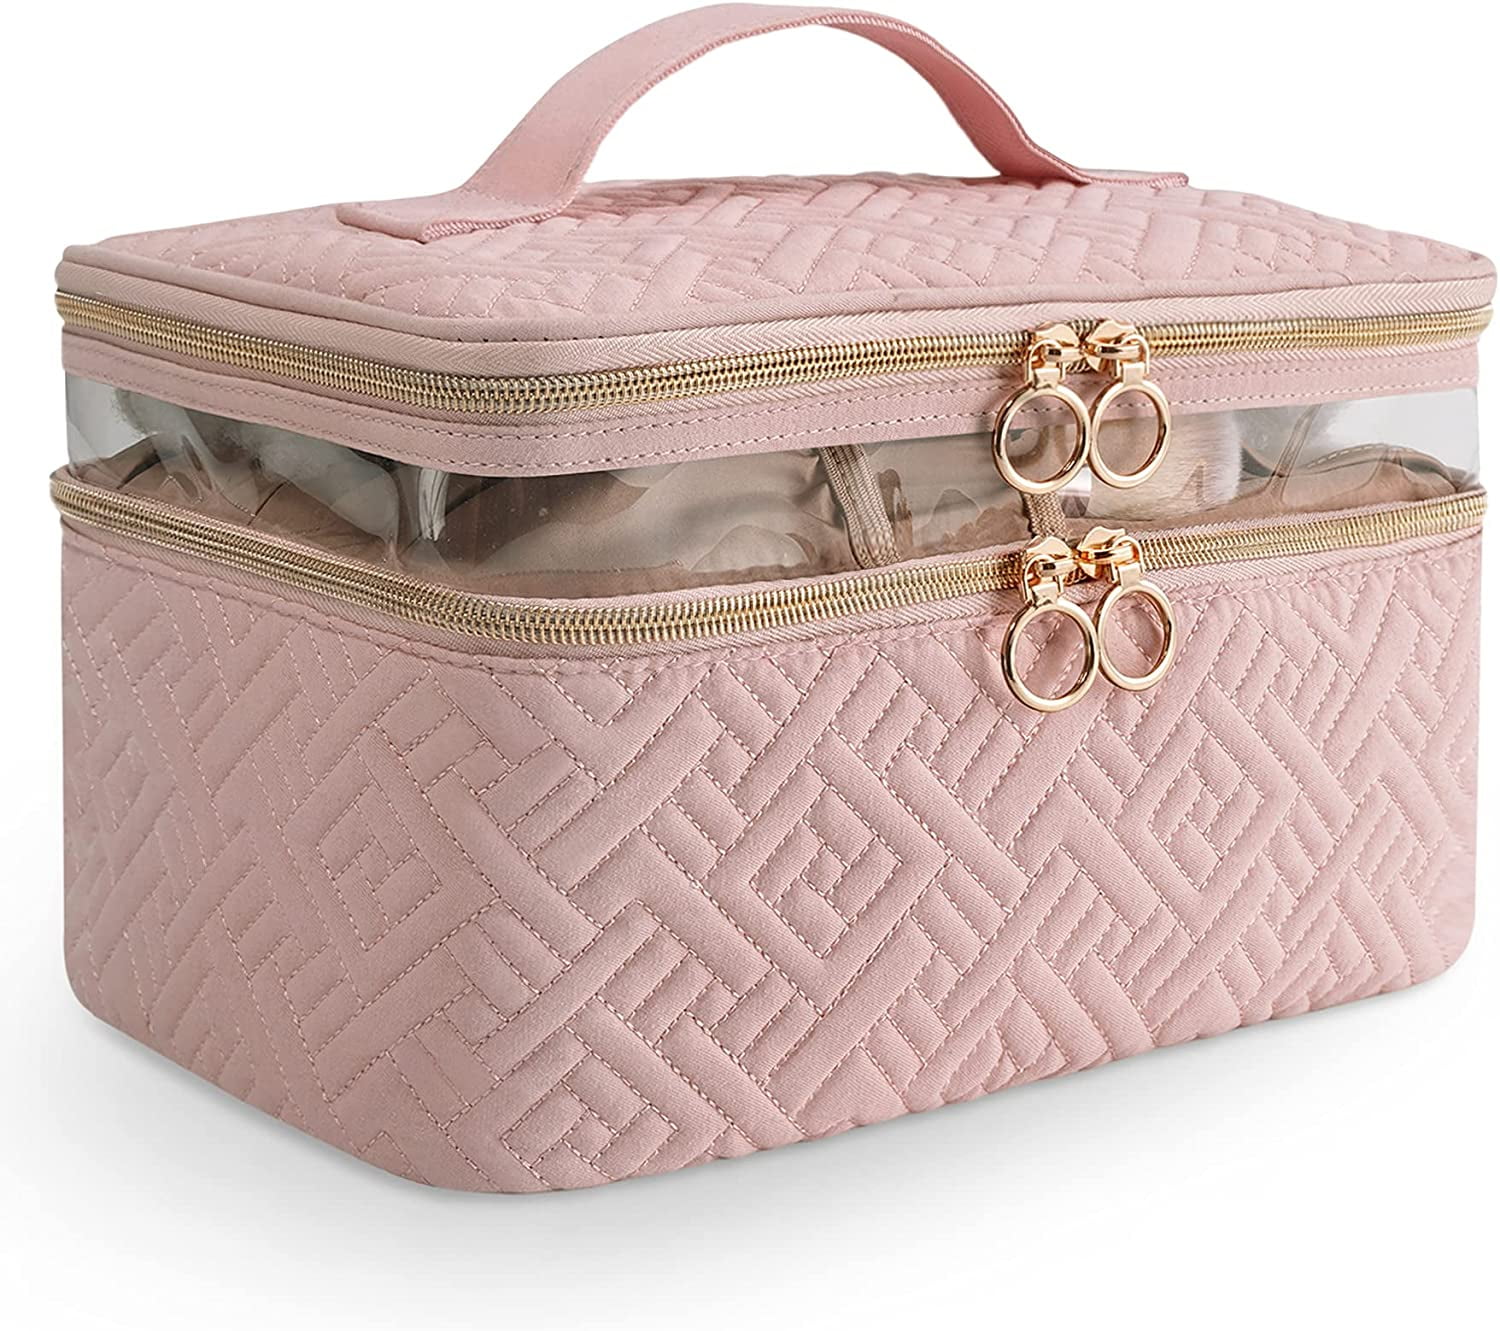 Designer Vanity Cases That Double As Top Handle Bags